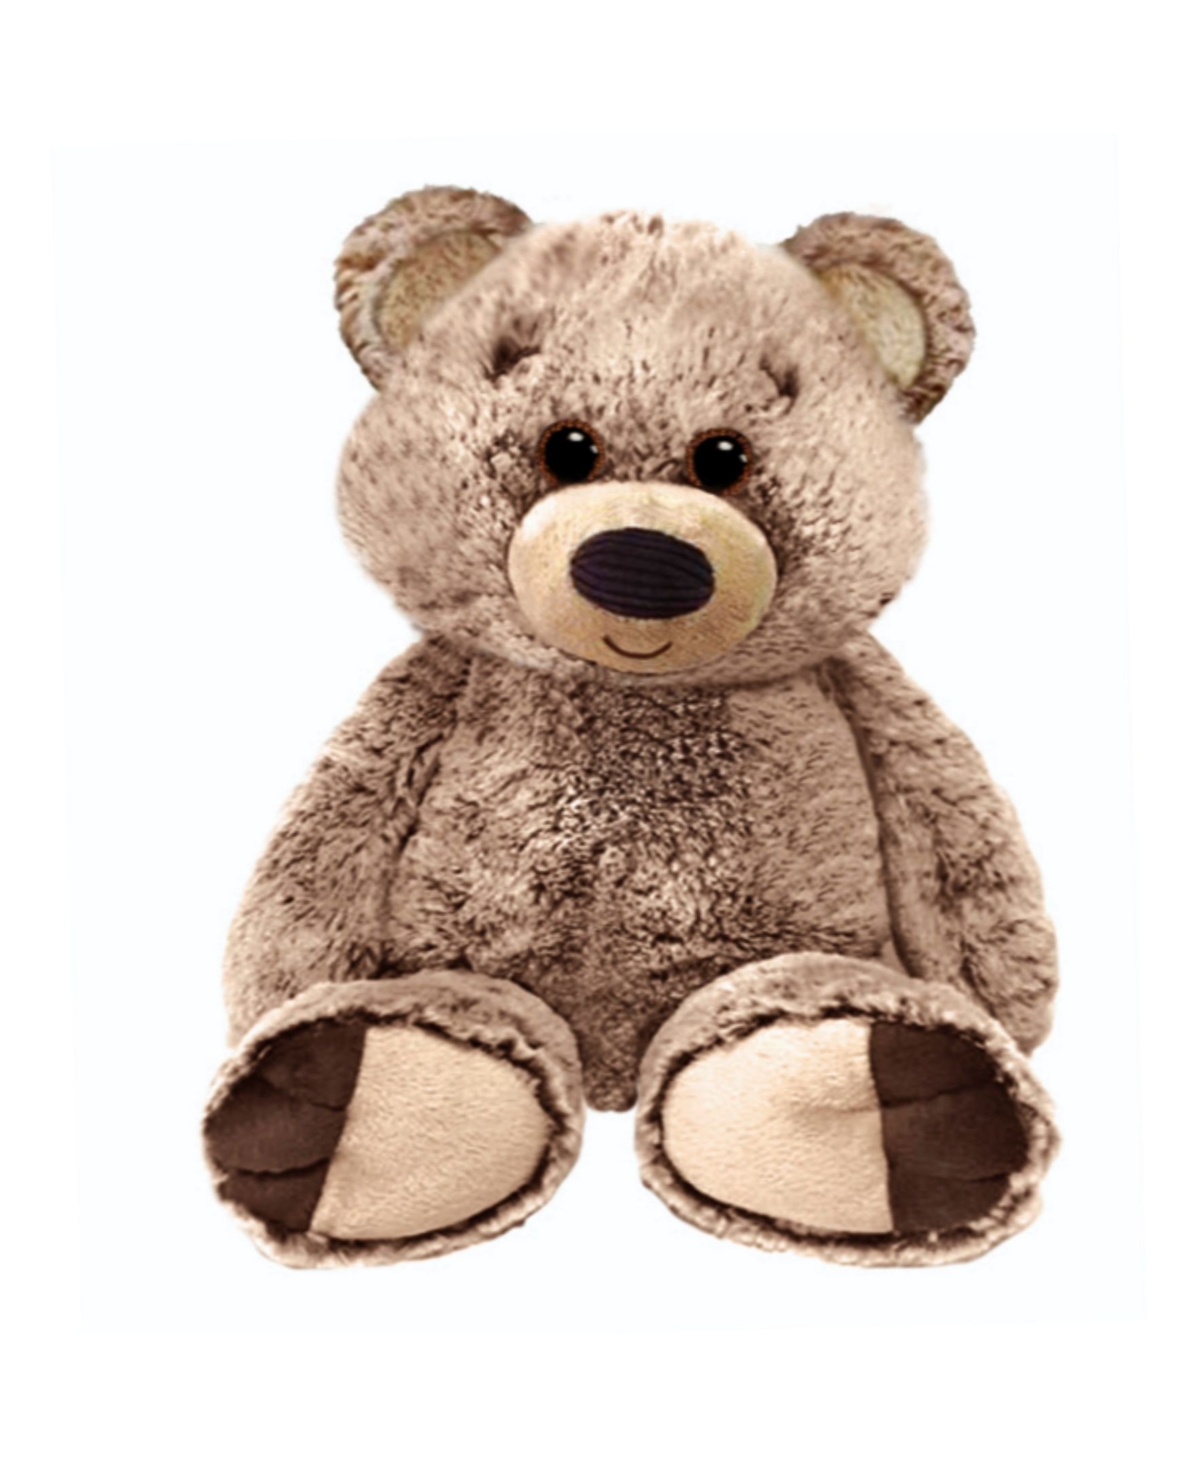 First & Main 7" Teddy Bear, Bumbley In Brown